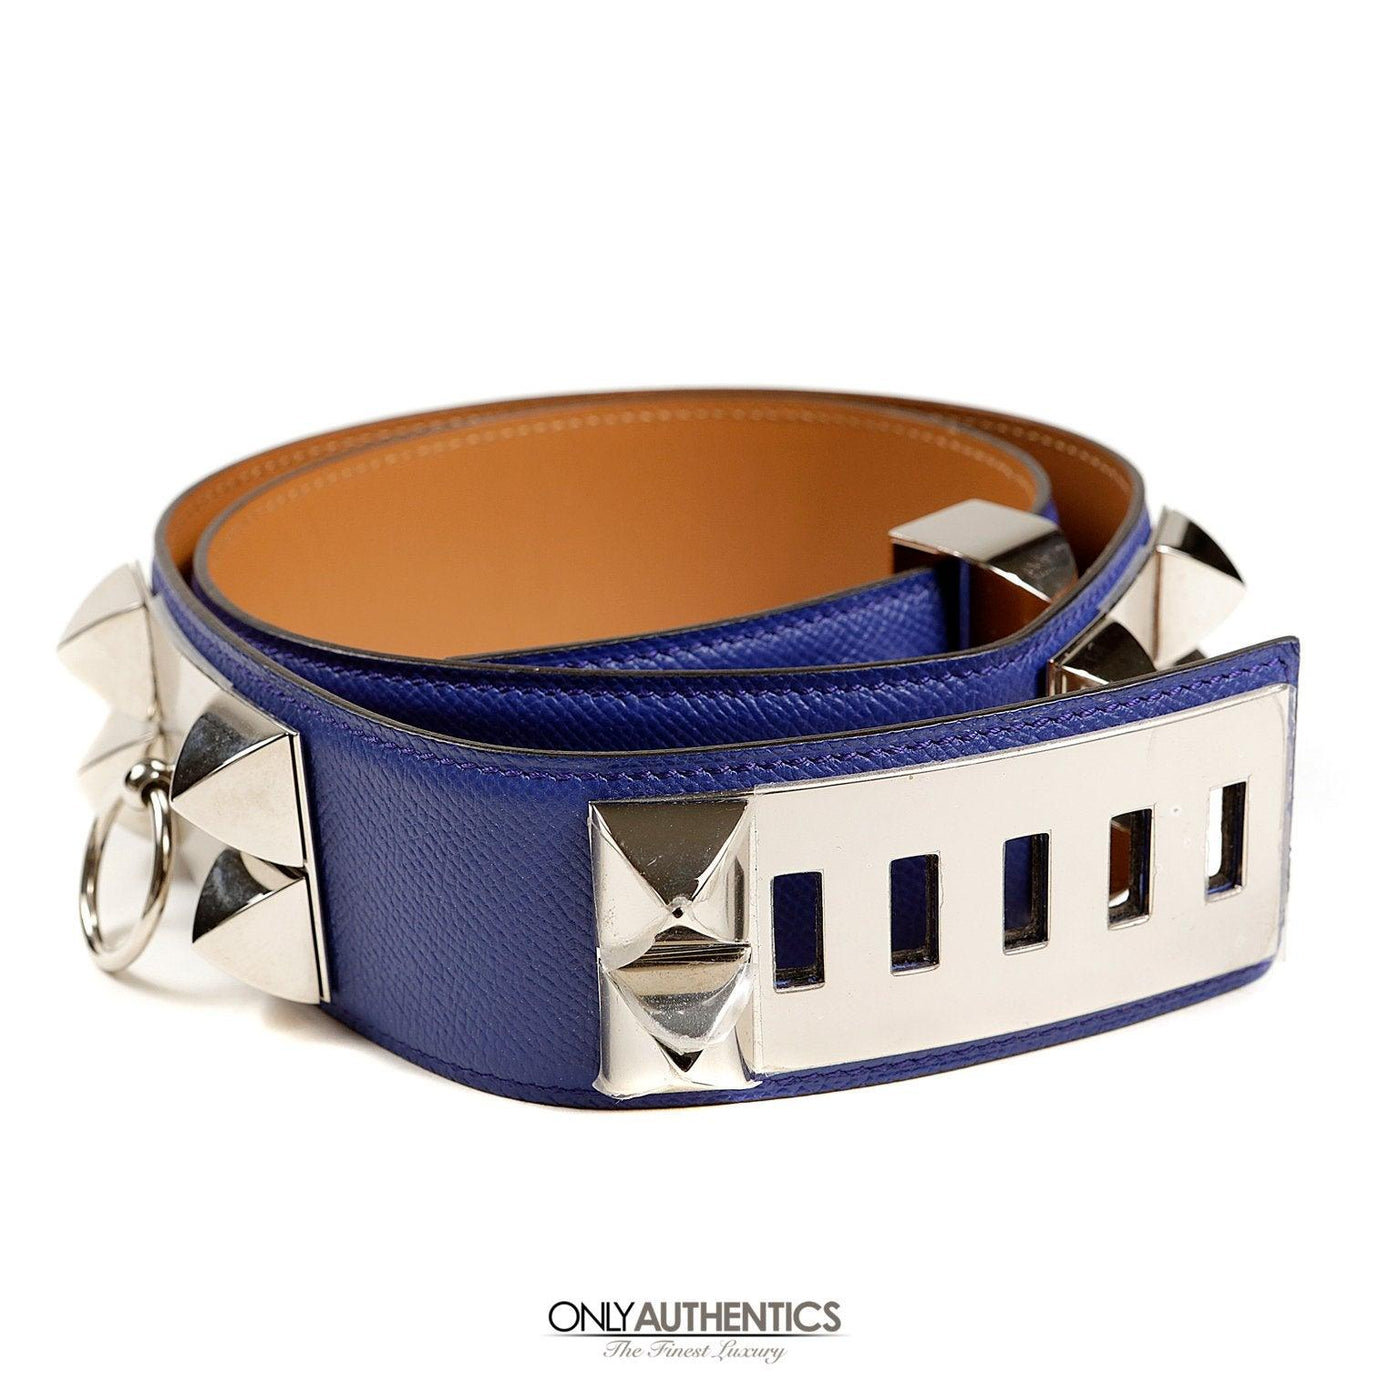 Hermès Blue Electrique Epsom Medor Belt size 80 - Only Authentics